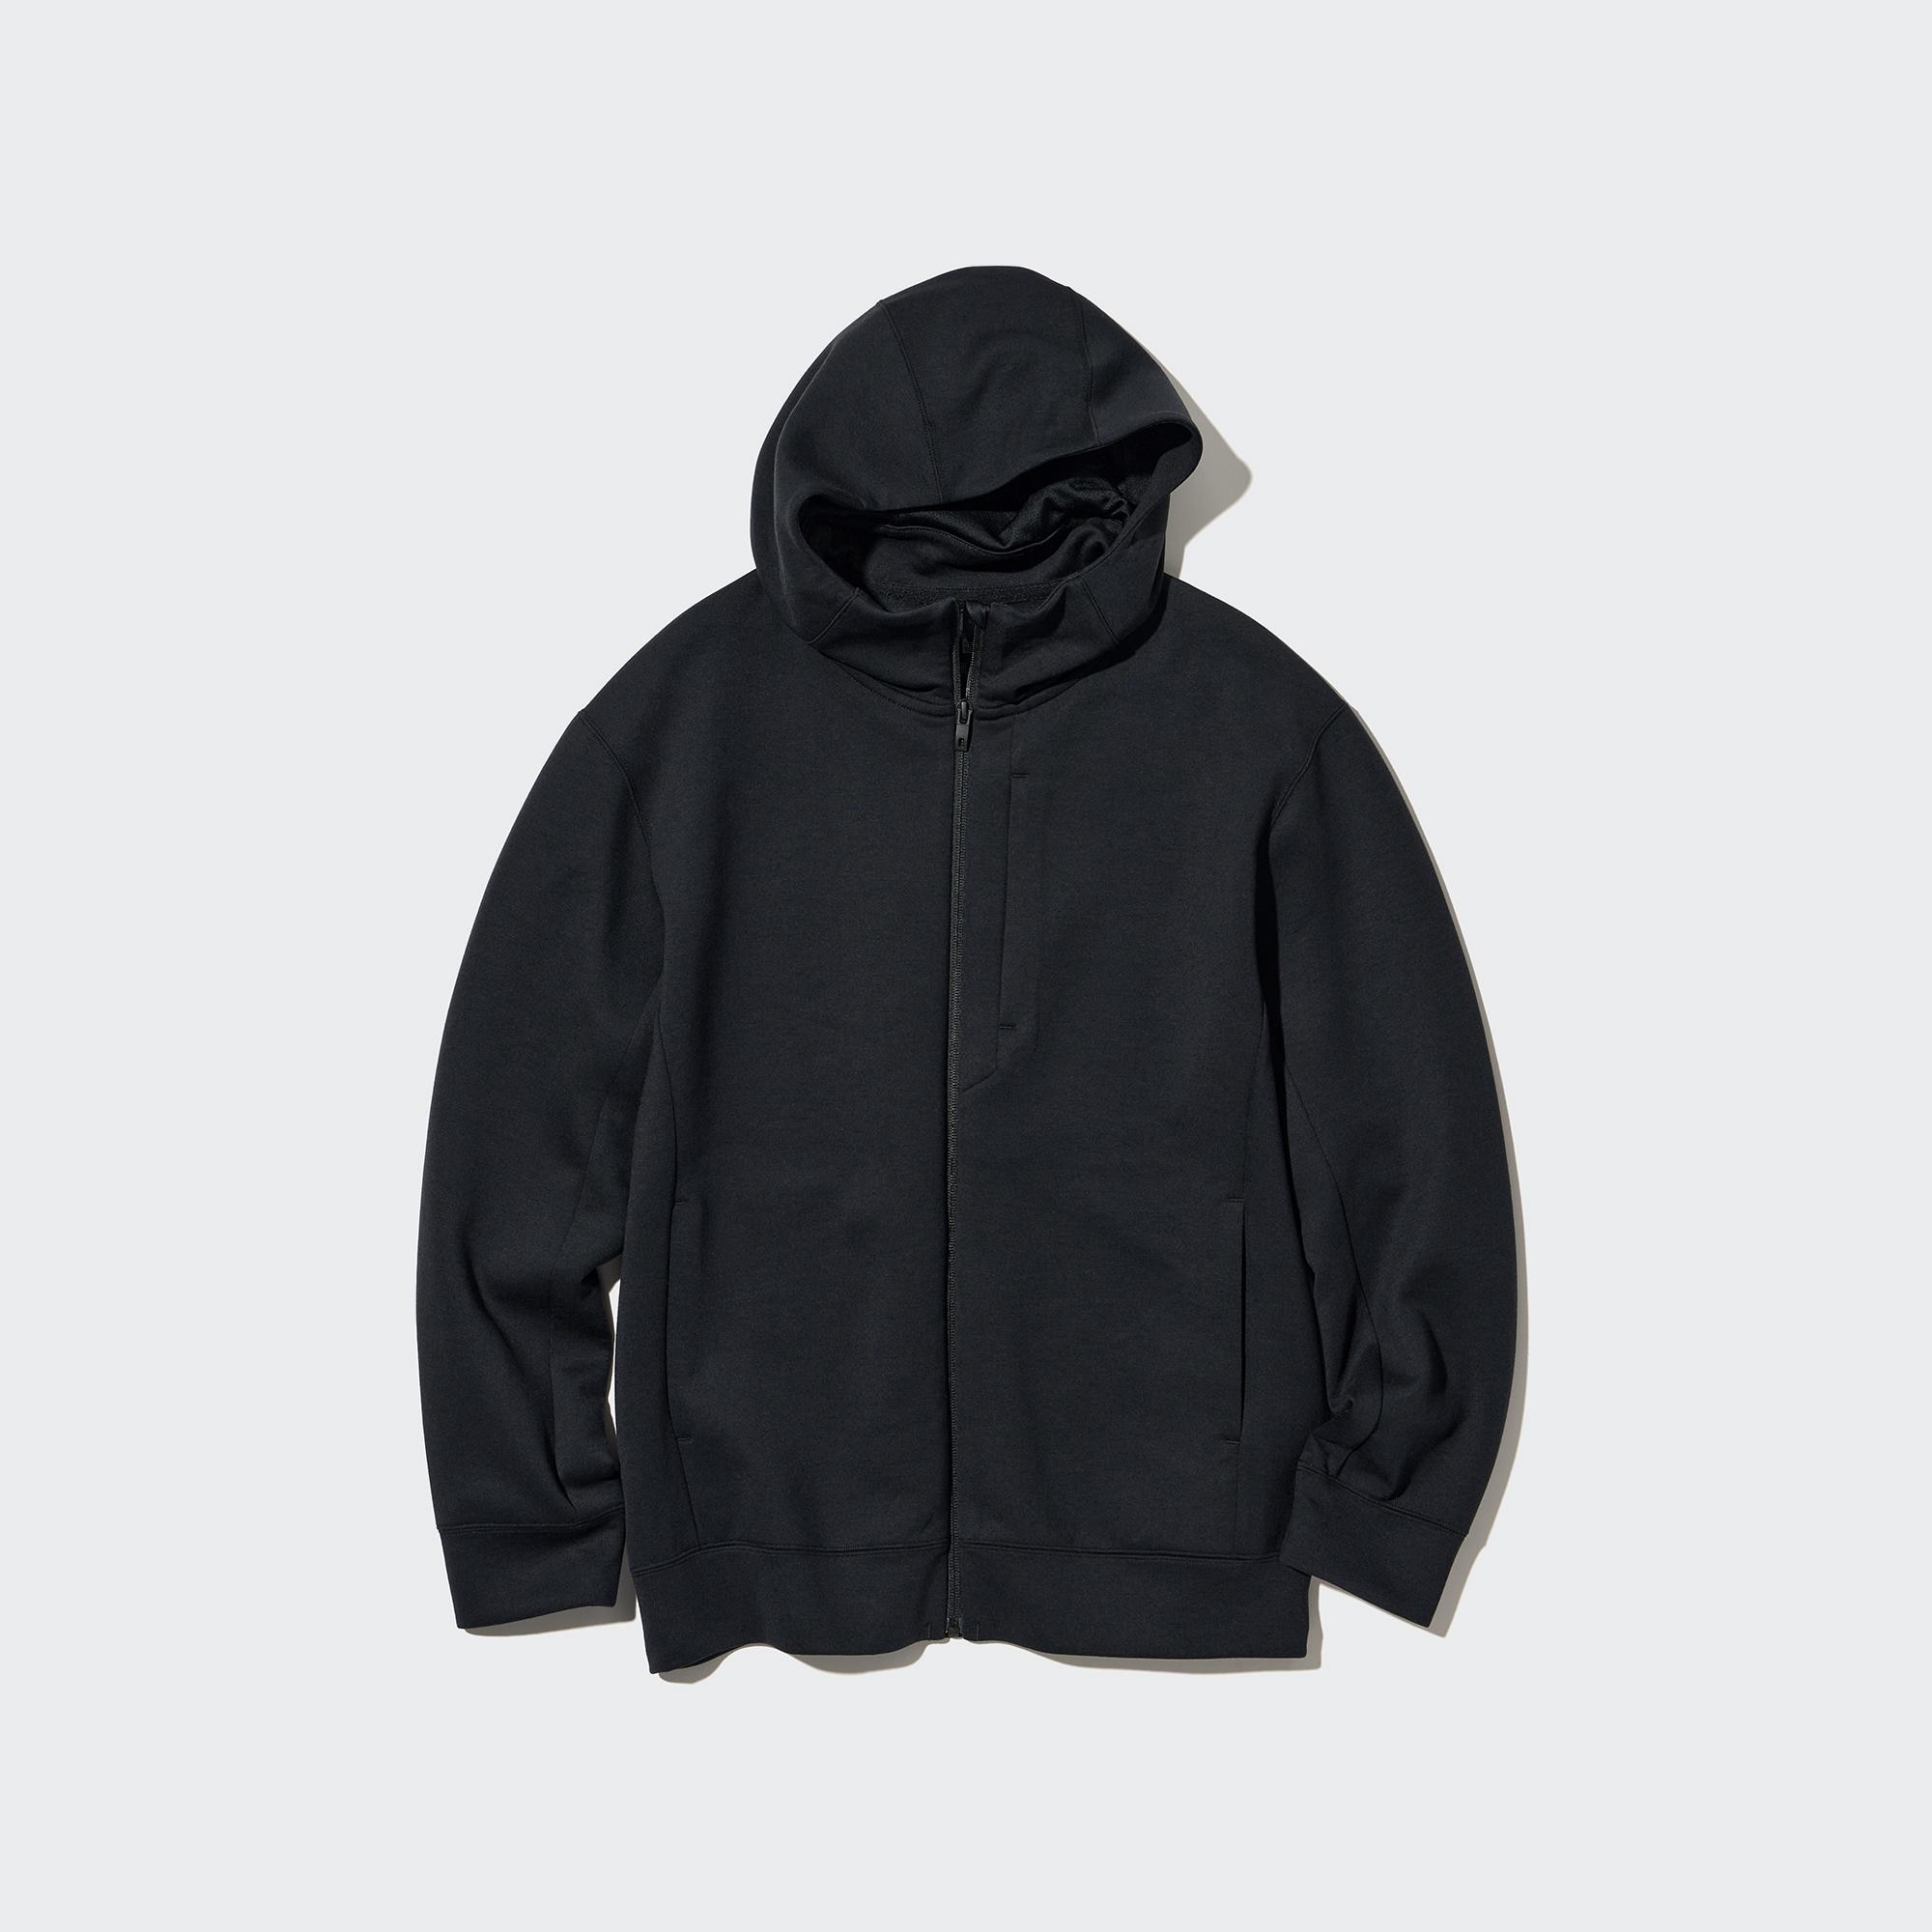 Clearance Clothing Under $10,POROPL Long Sleeve Hoodies Zipper Pocket Sport  Sweatshirt Sweater Suit Jacket Mens Hoodies Pullover Black Size 6 